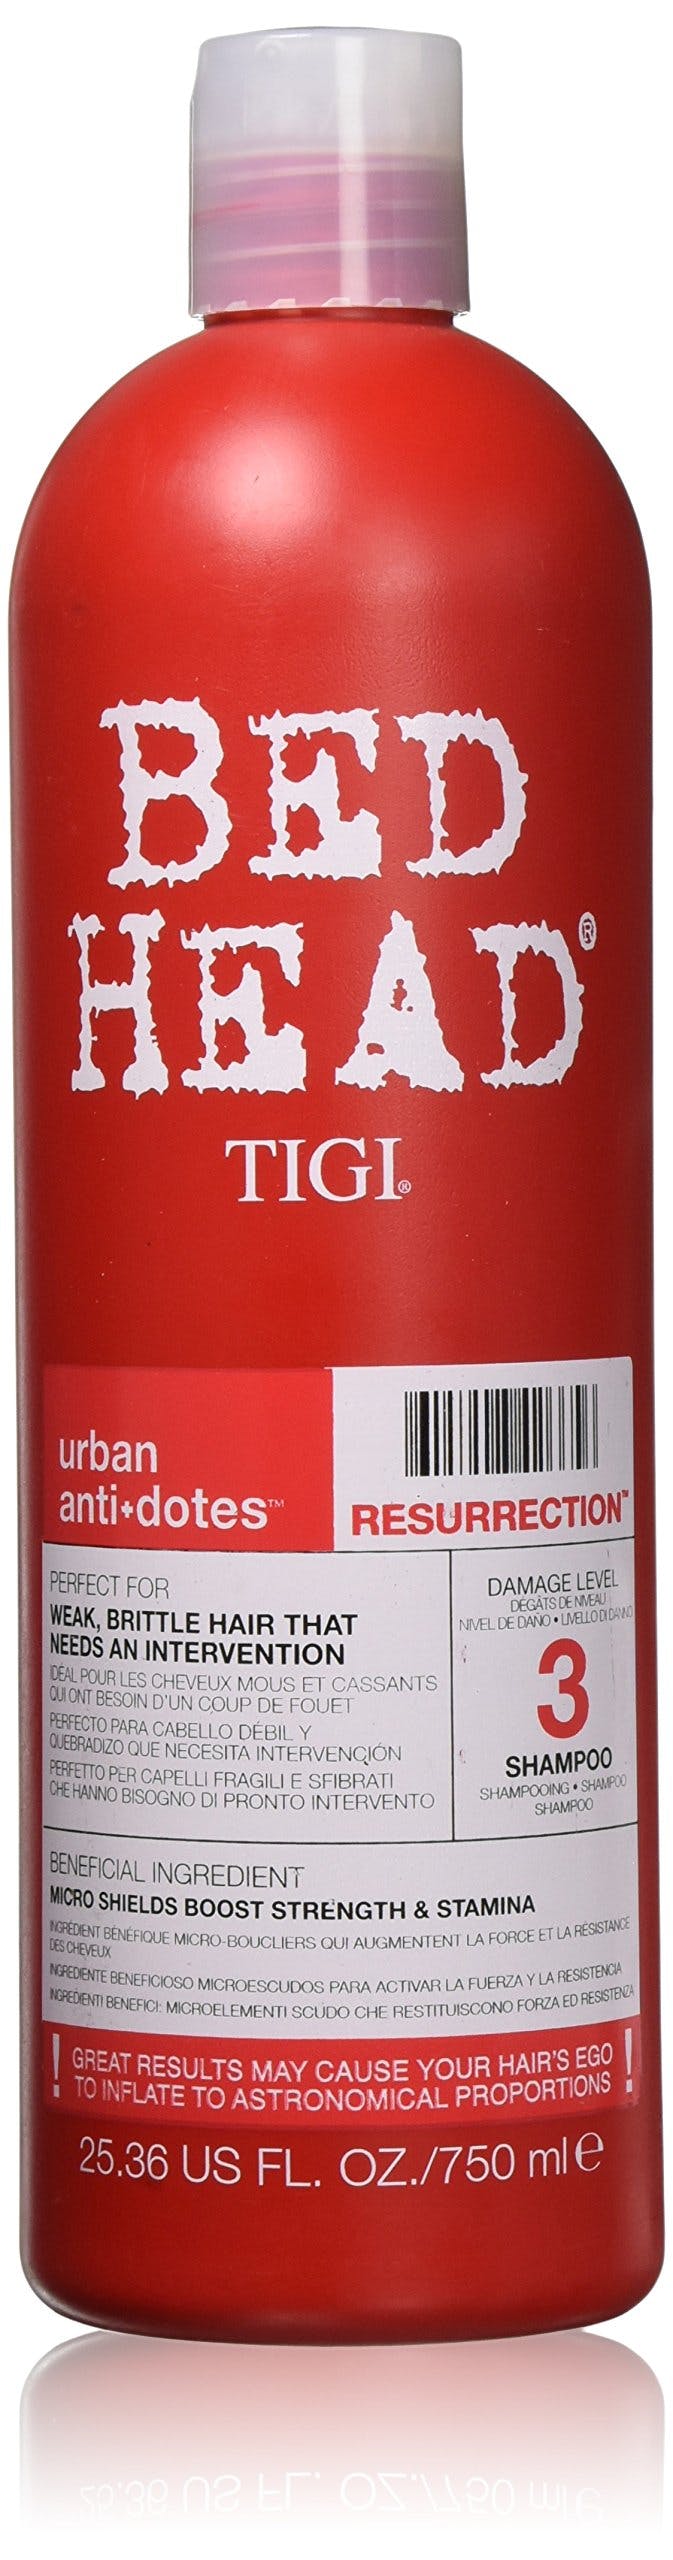 Tigi Bed Head Resurrection No.3 Shampoo